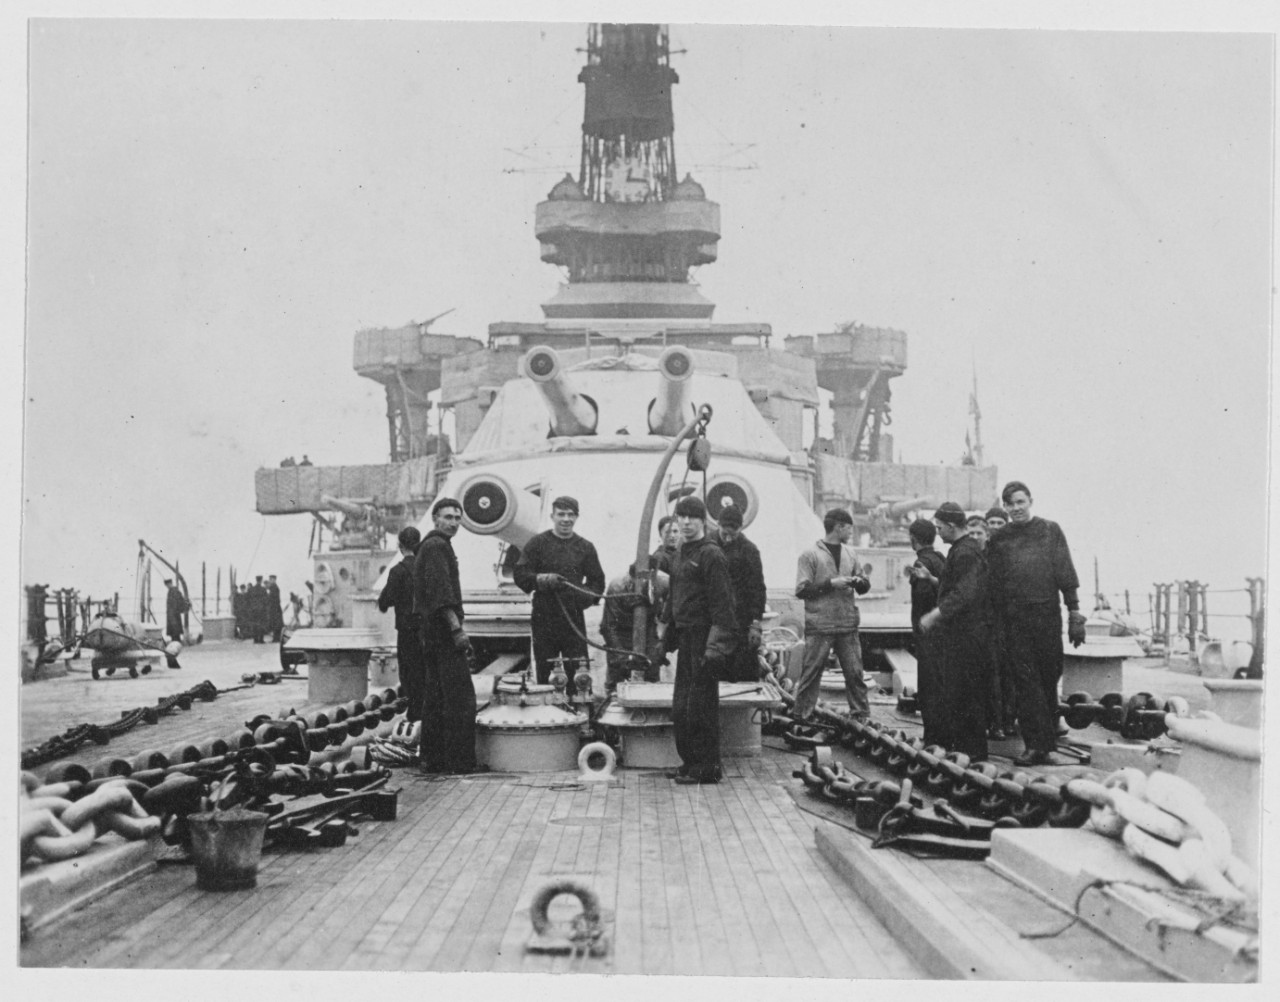 U.S. Battleship in the North Sea, showing turret guns